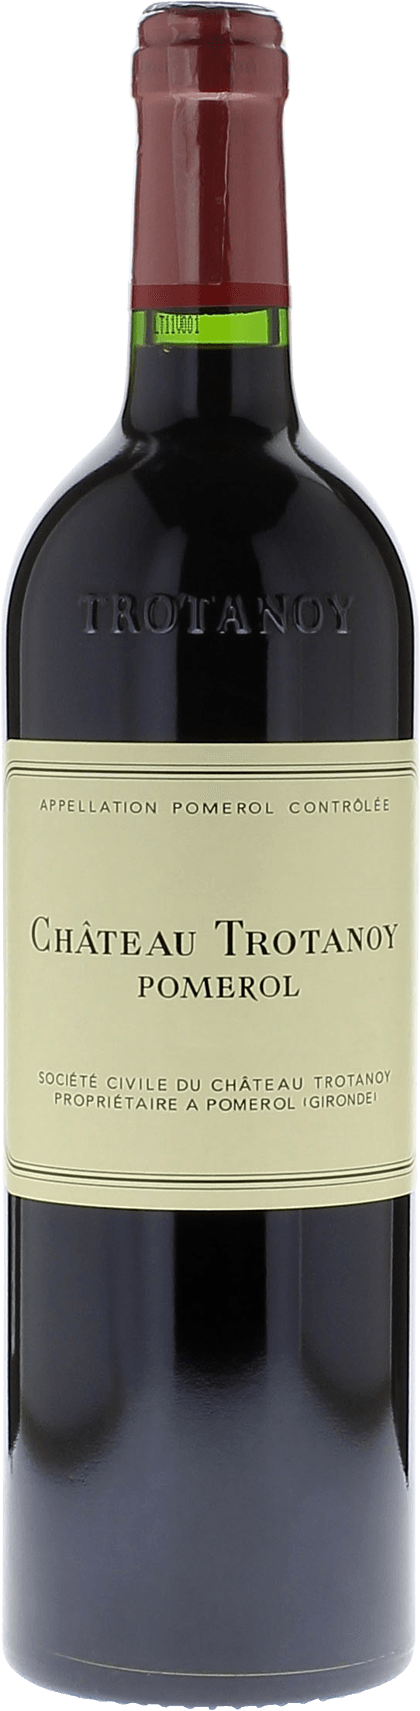 Trotanoy 1969  Pomerol, Bordeaux rouge